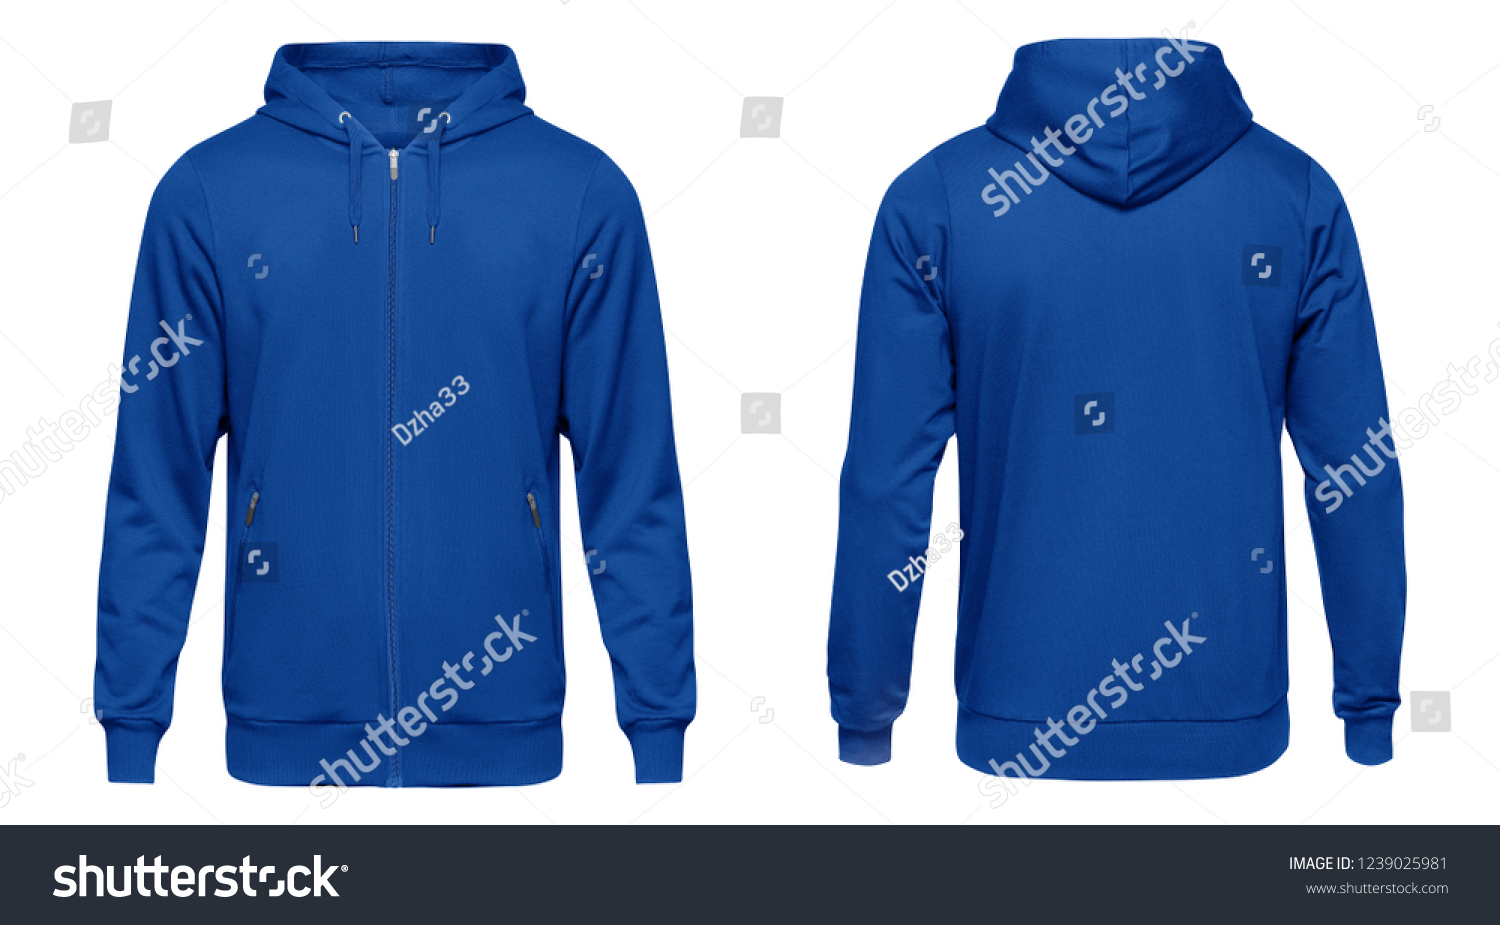 11,736 Blue jacket template Images, Stock Photos & Vectors | Shutterstock